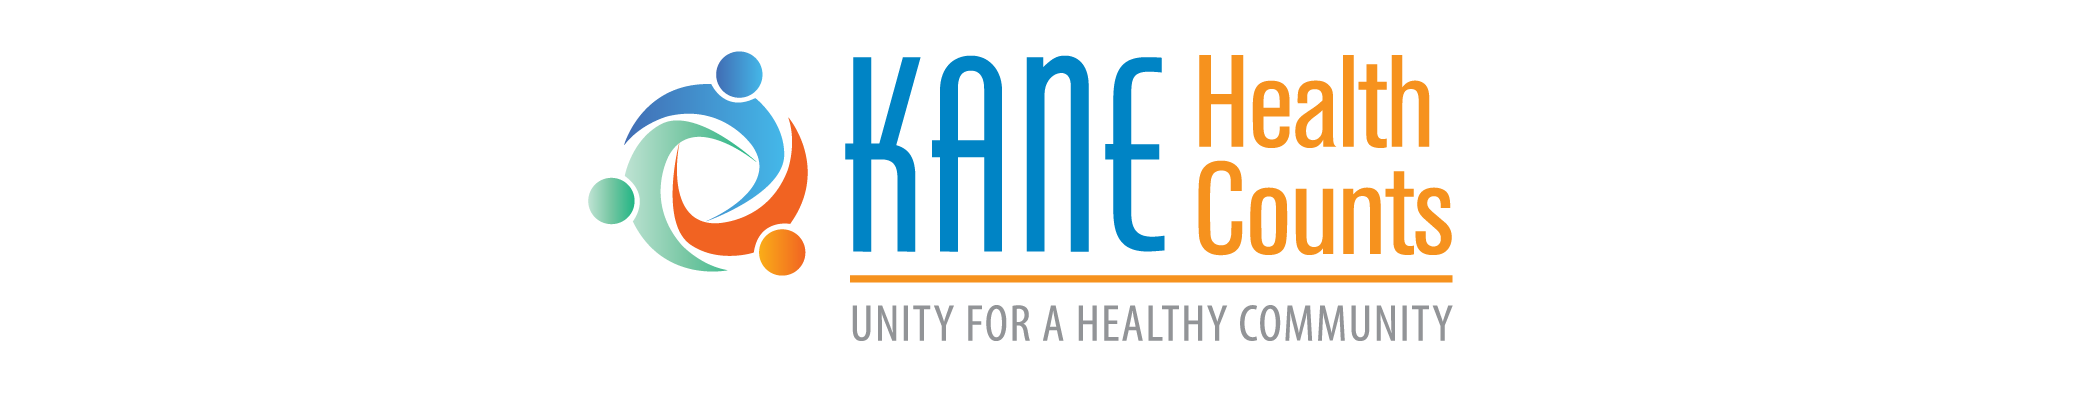 Kane Health Counts